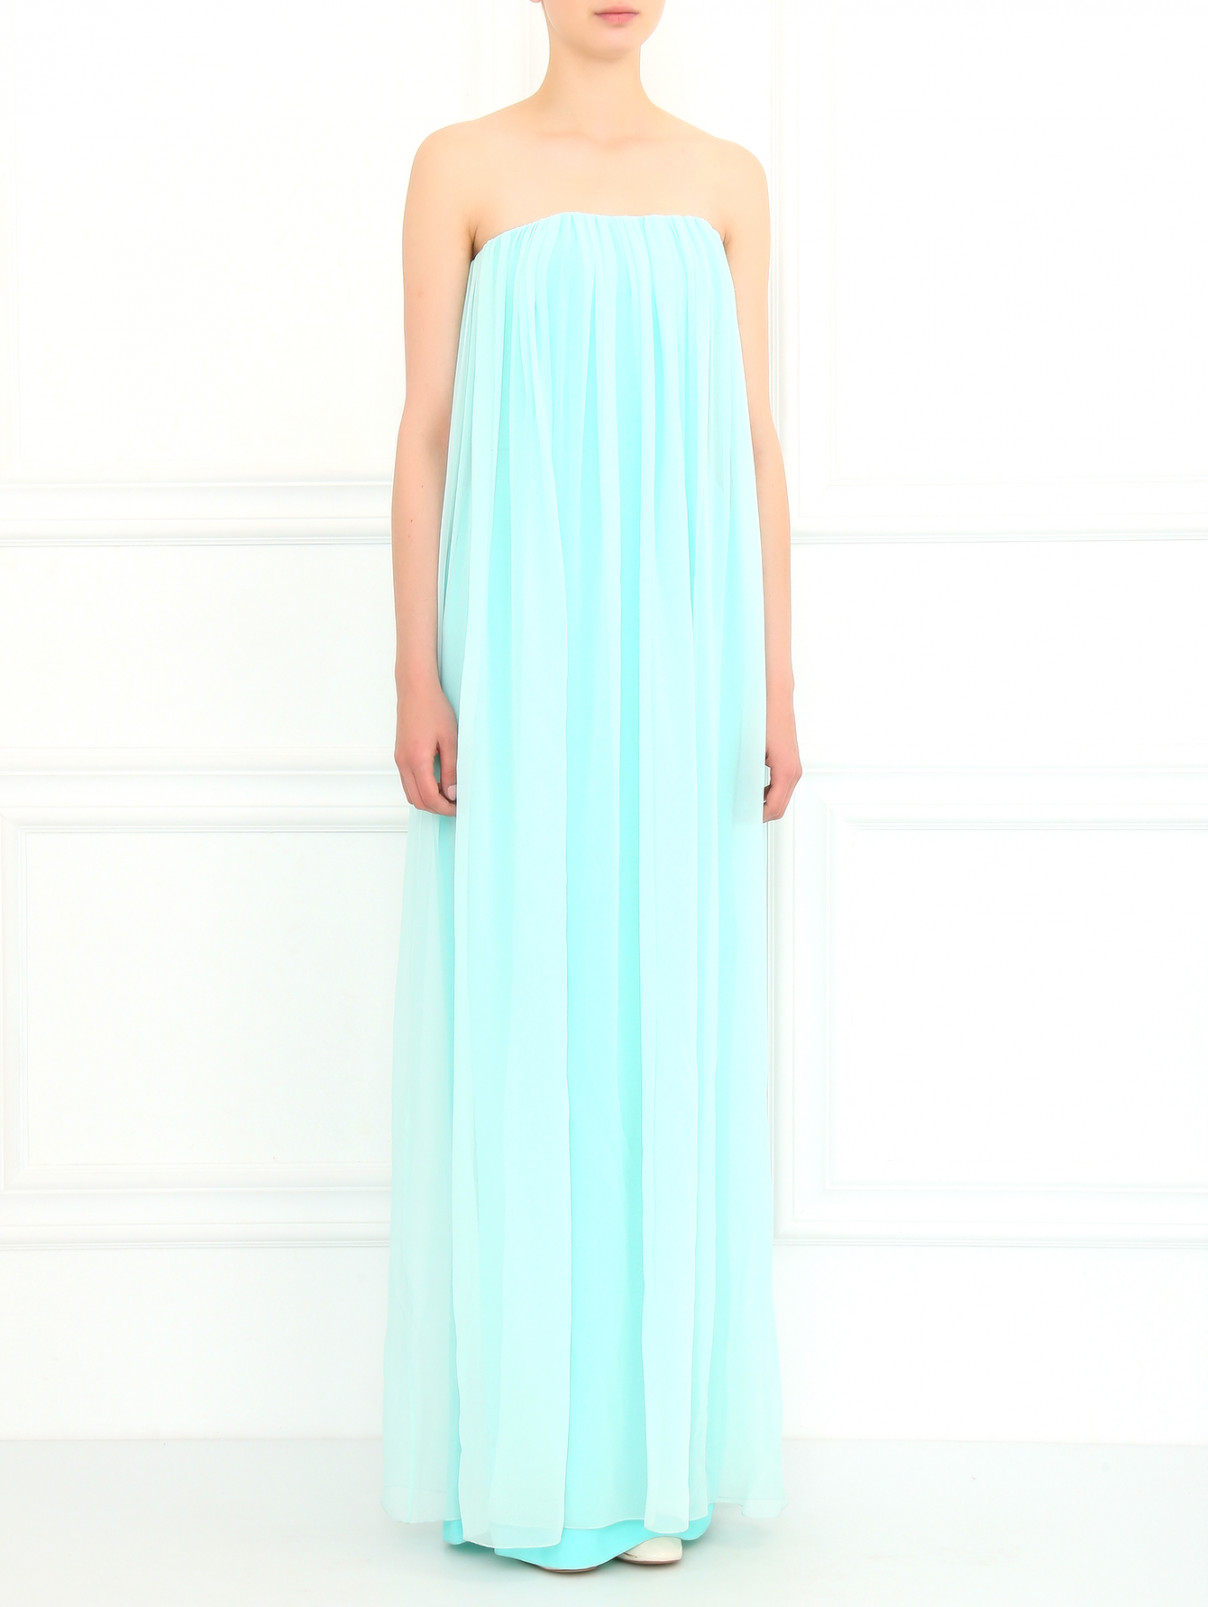 Платье-макси из шелка Kira Plastinina  –  Модель Верх-Низ  – Цвет:  Синий